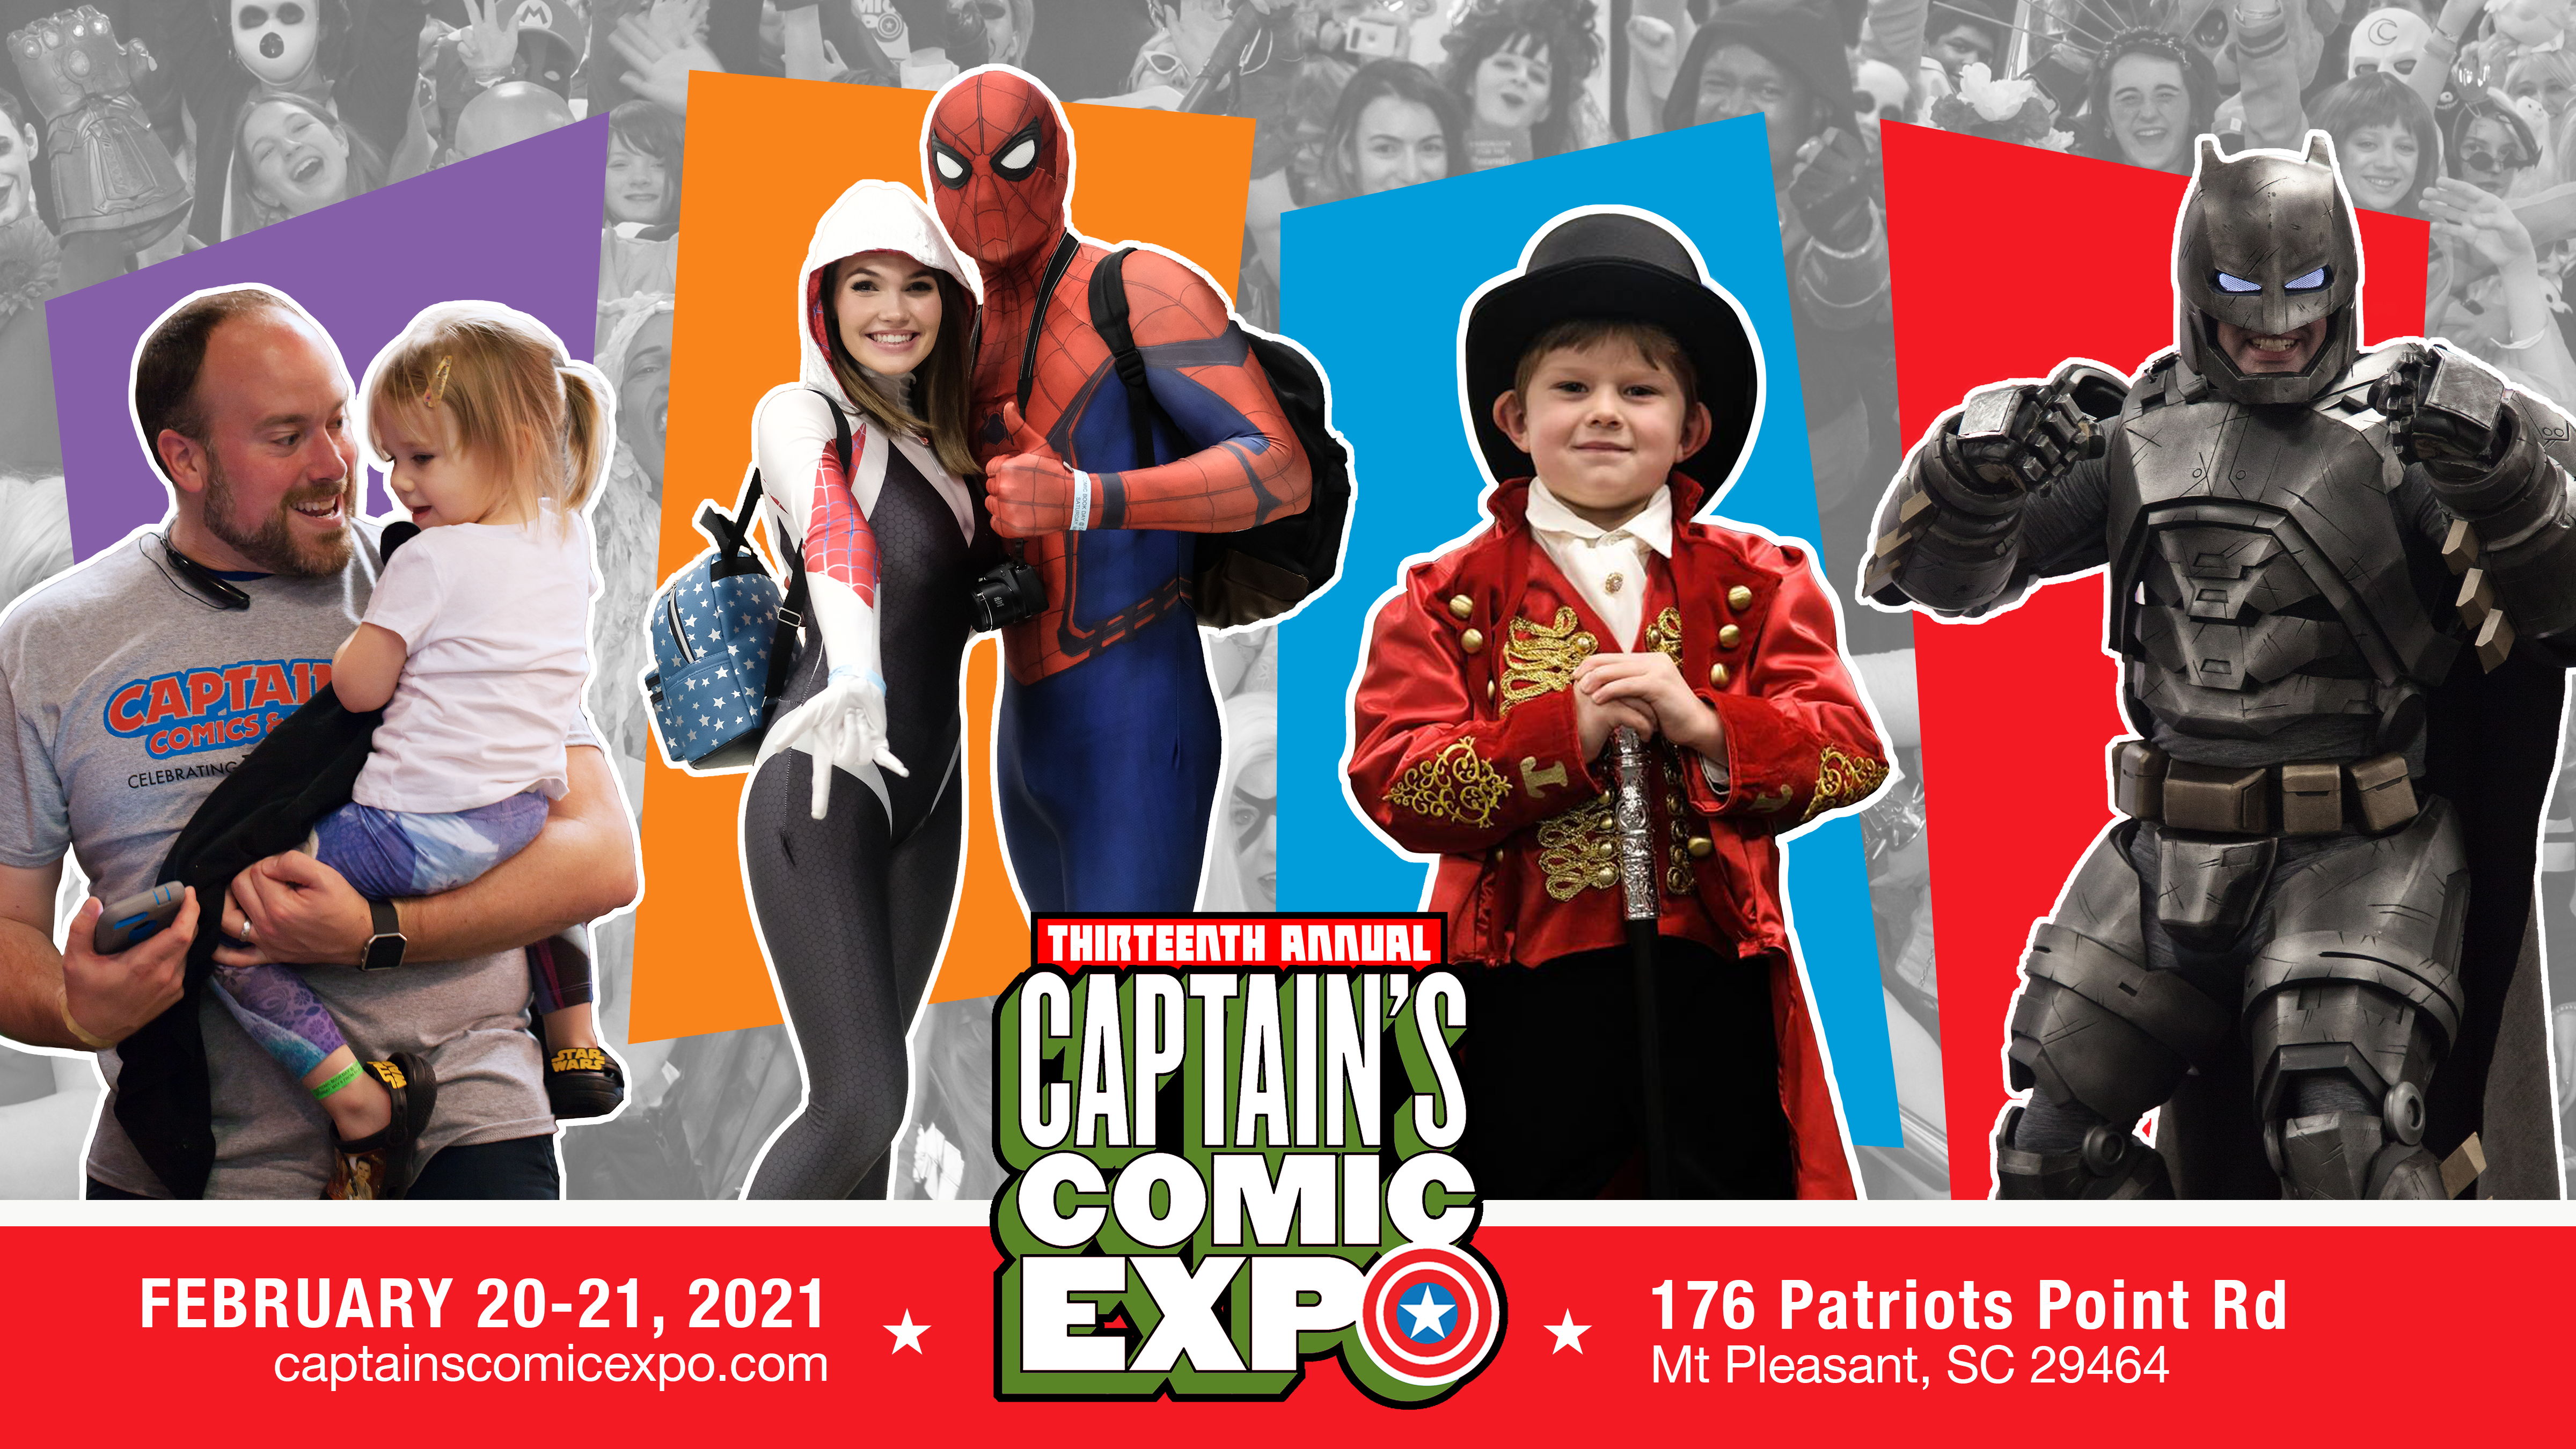 Captain's Comic Expo promotional image